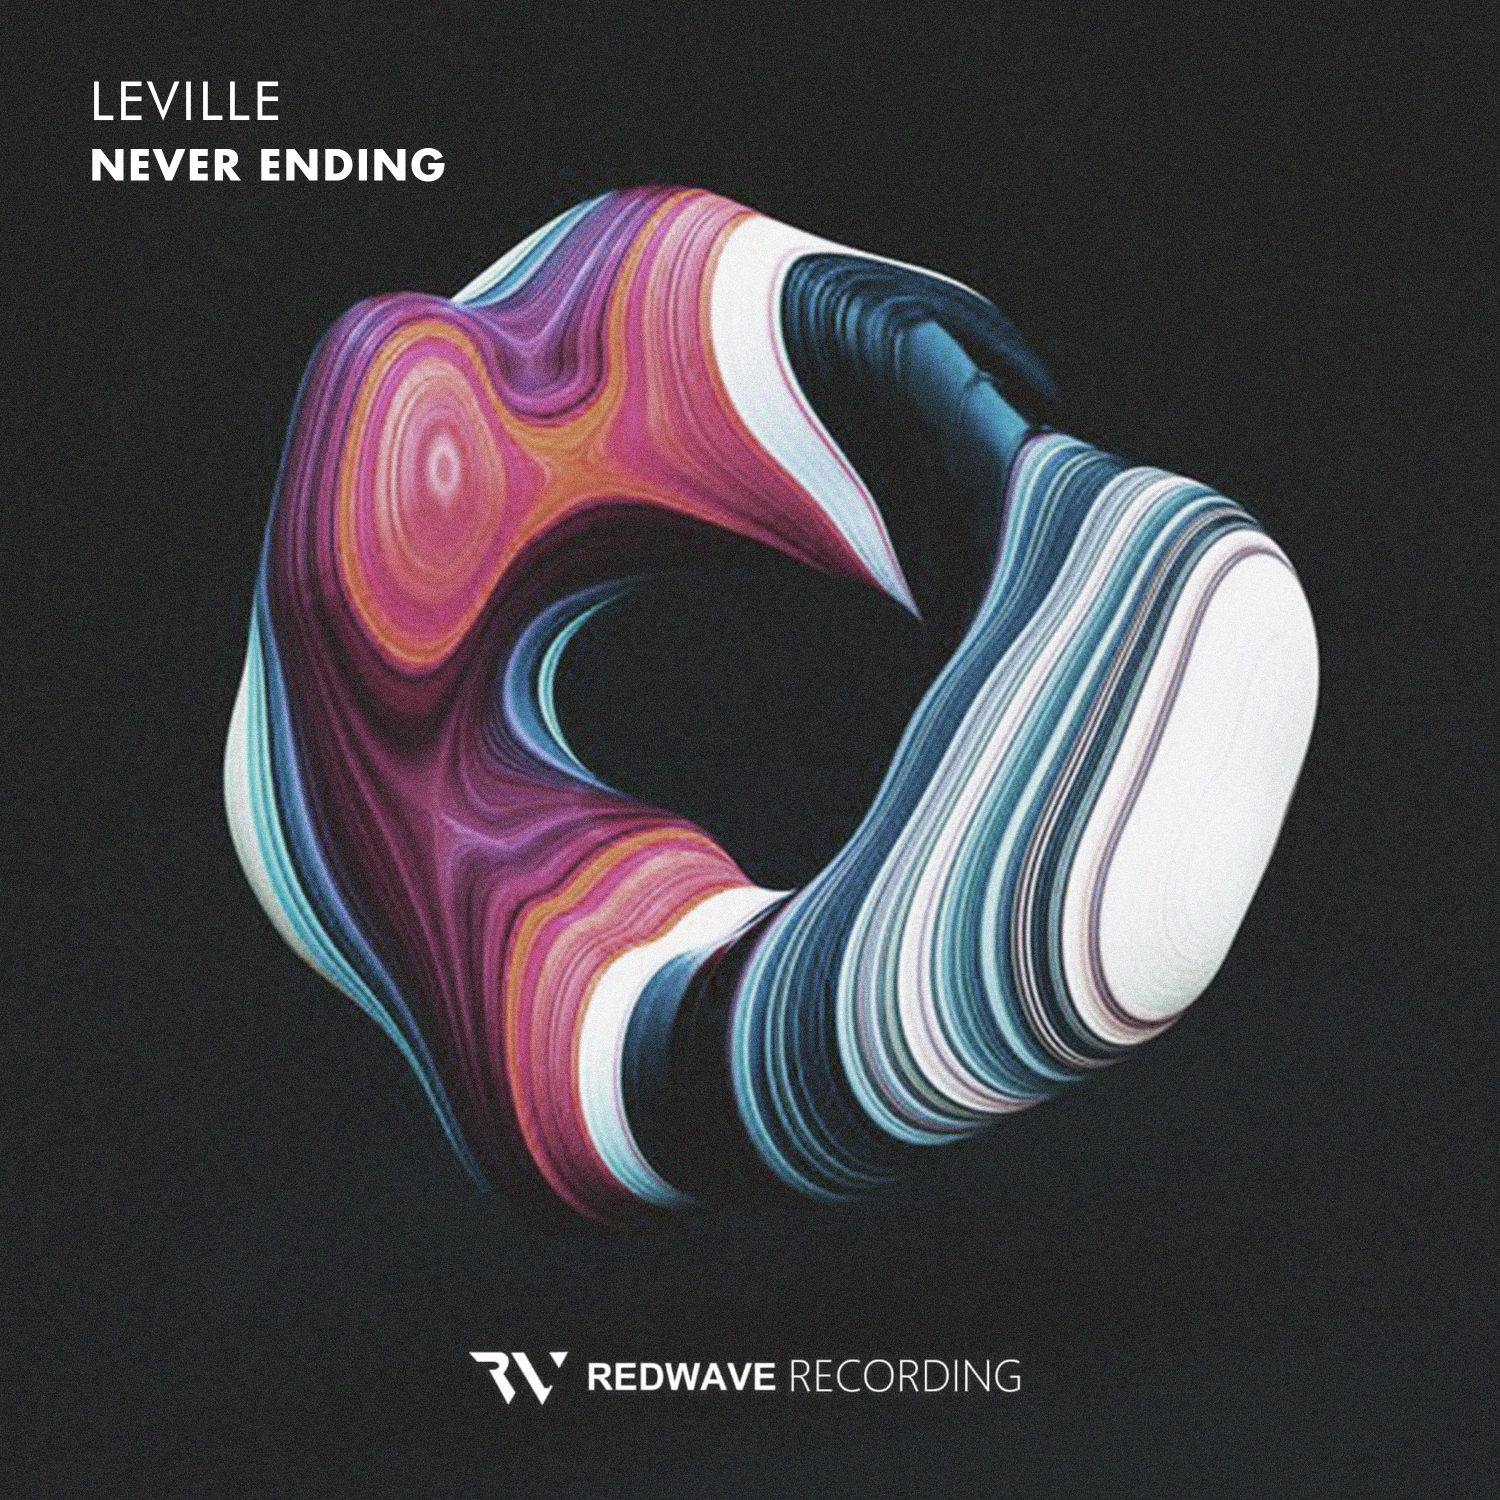 Leville presents Never Ending on Redwave Recordings